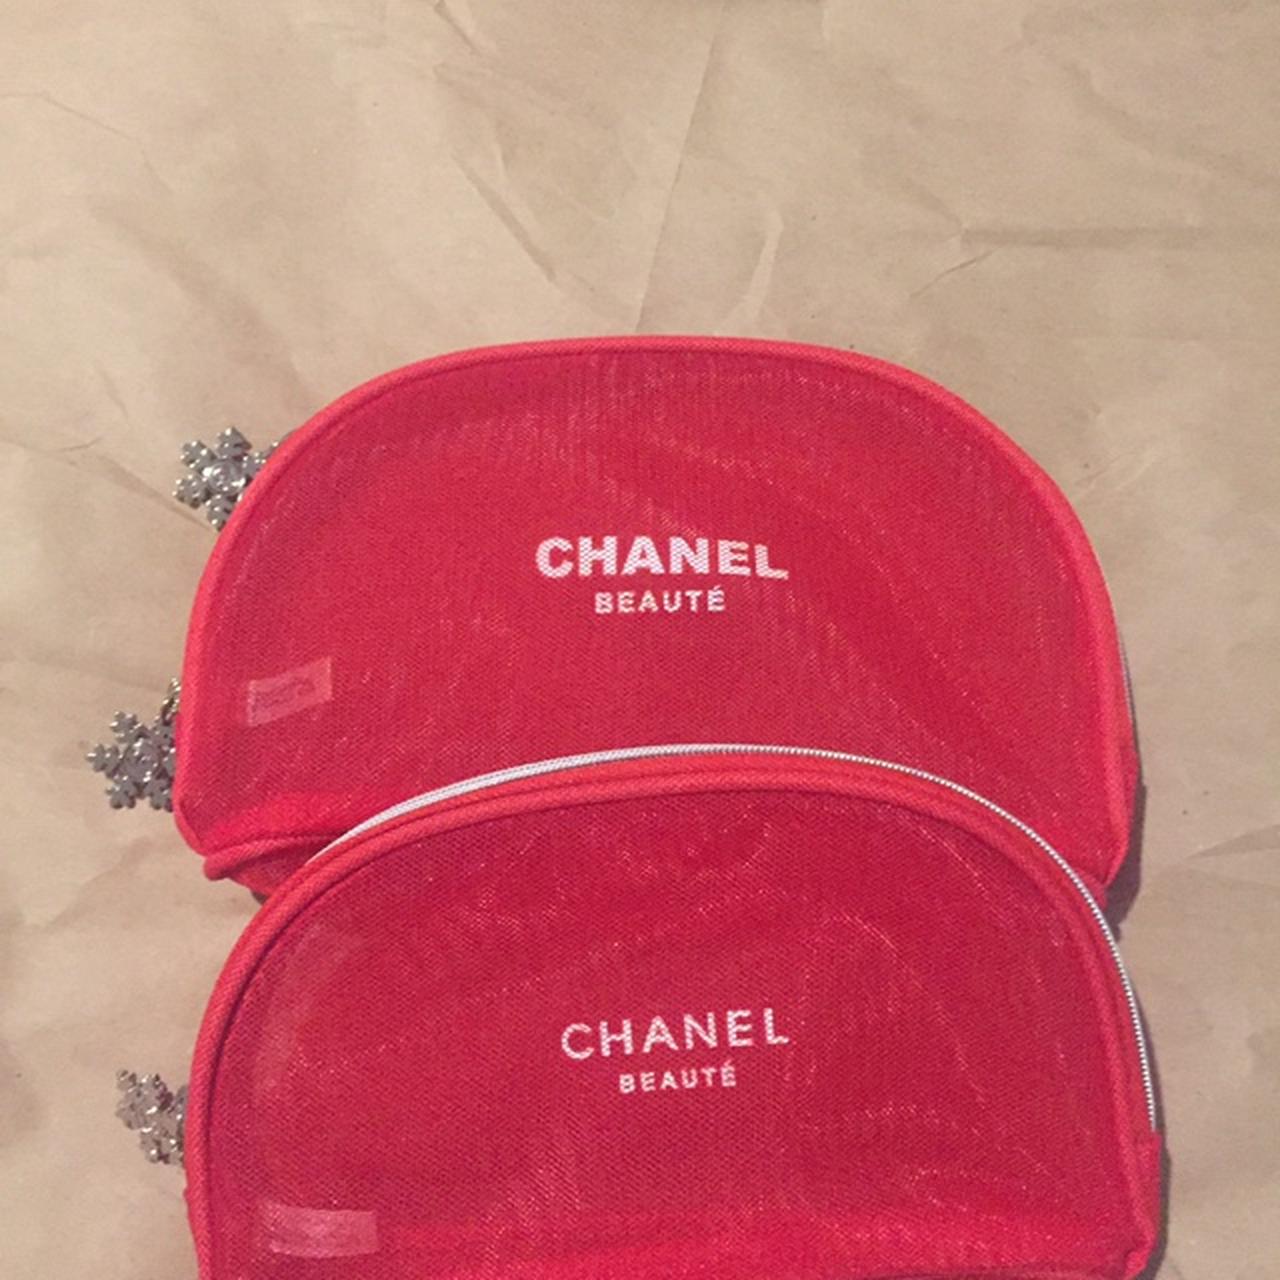 2 x Chanel red mesh snowflake makeup cosmetic bag.